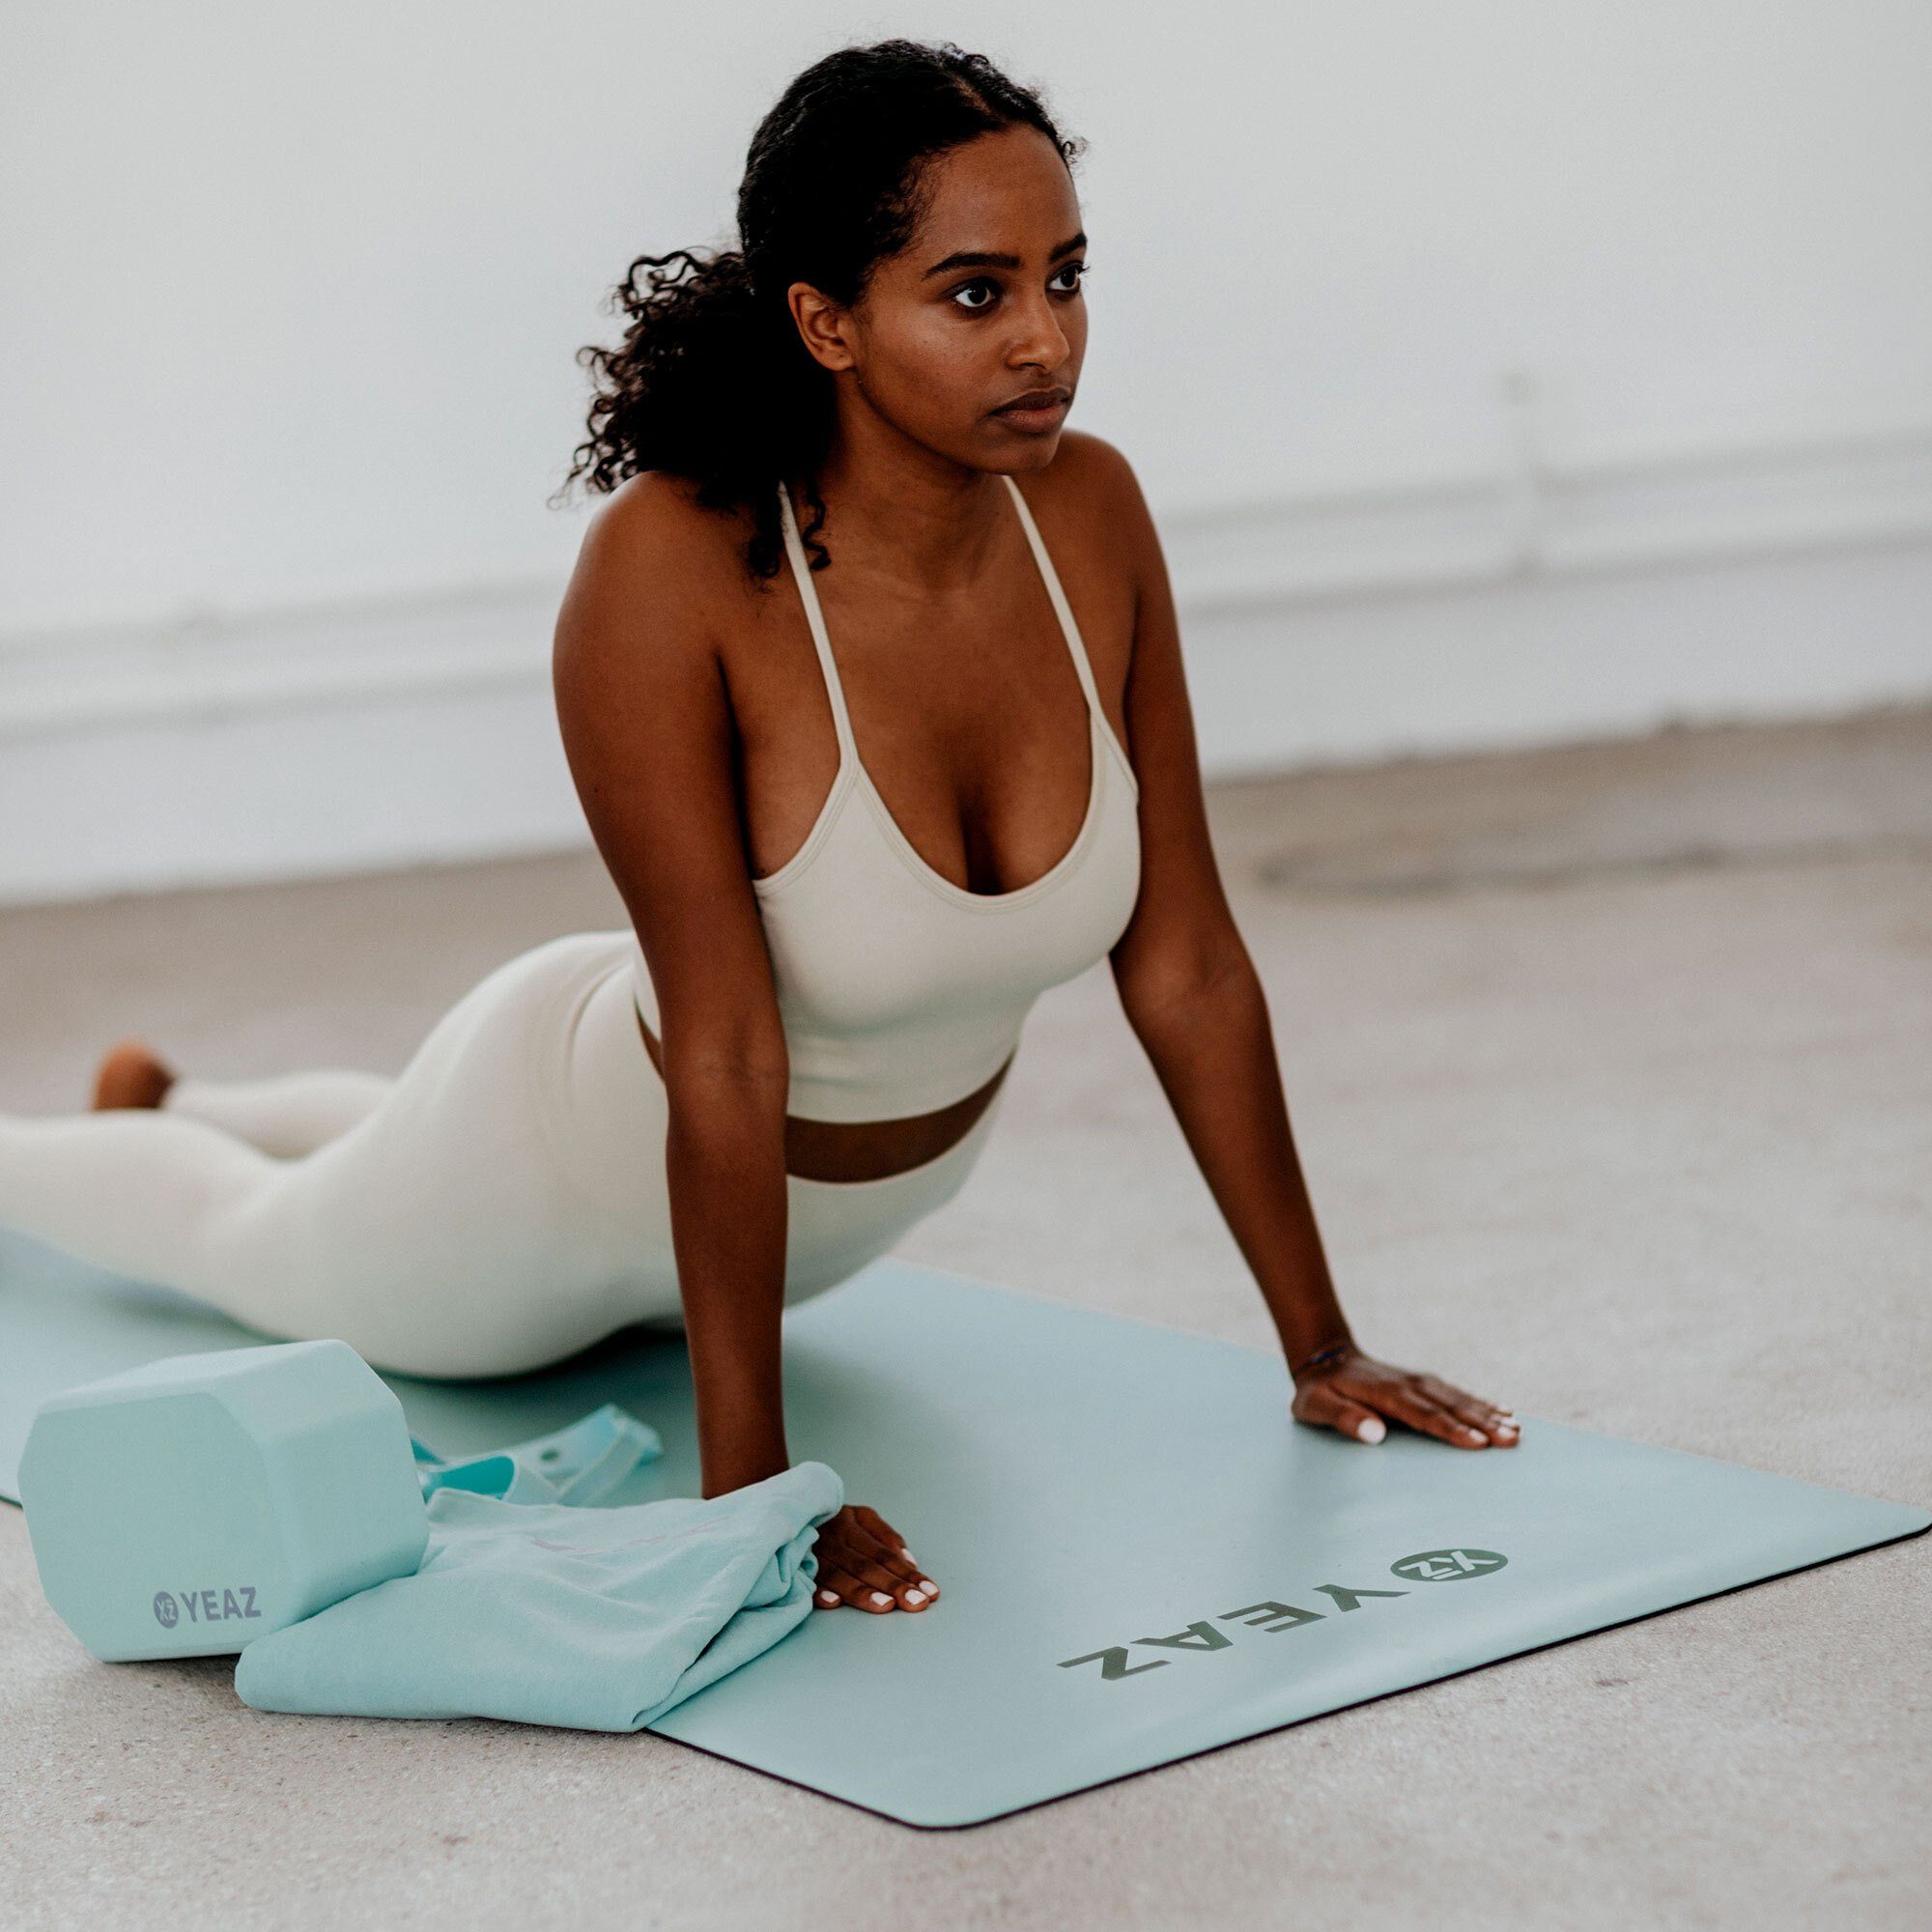 CARESS grün matte & - YEAZ set Yogamatte handtuch